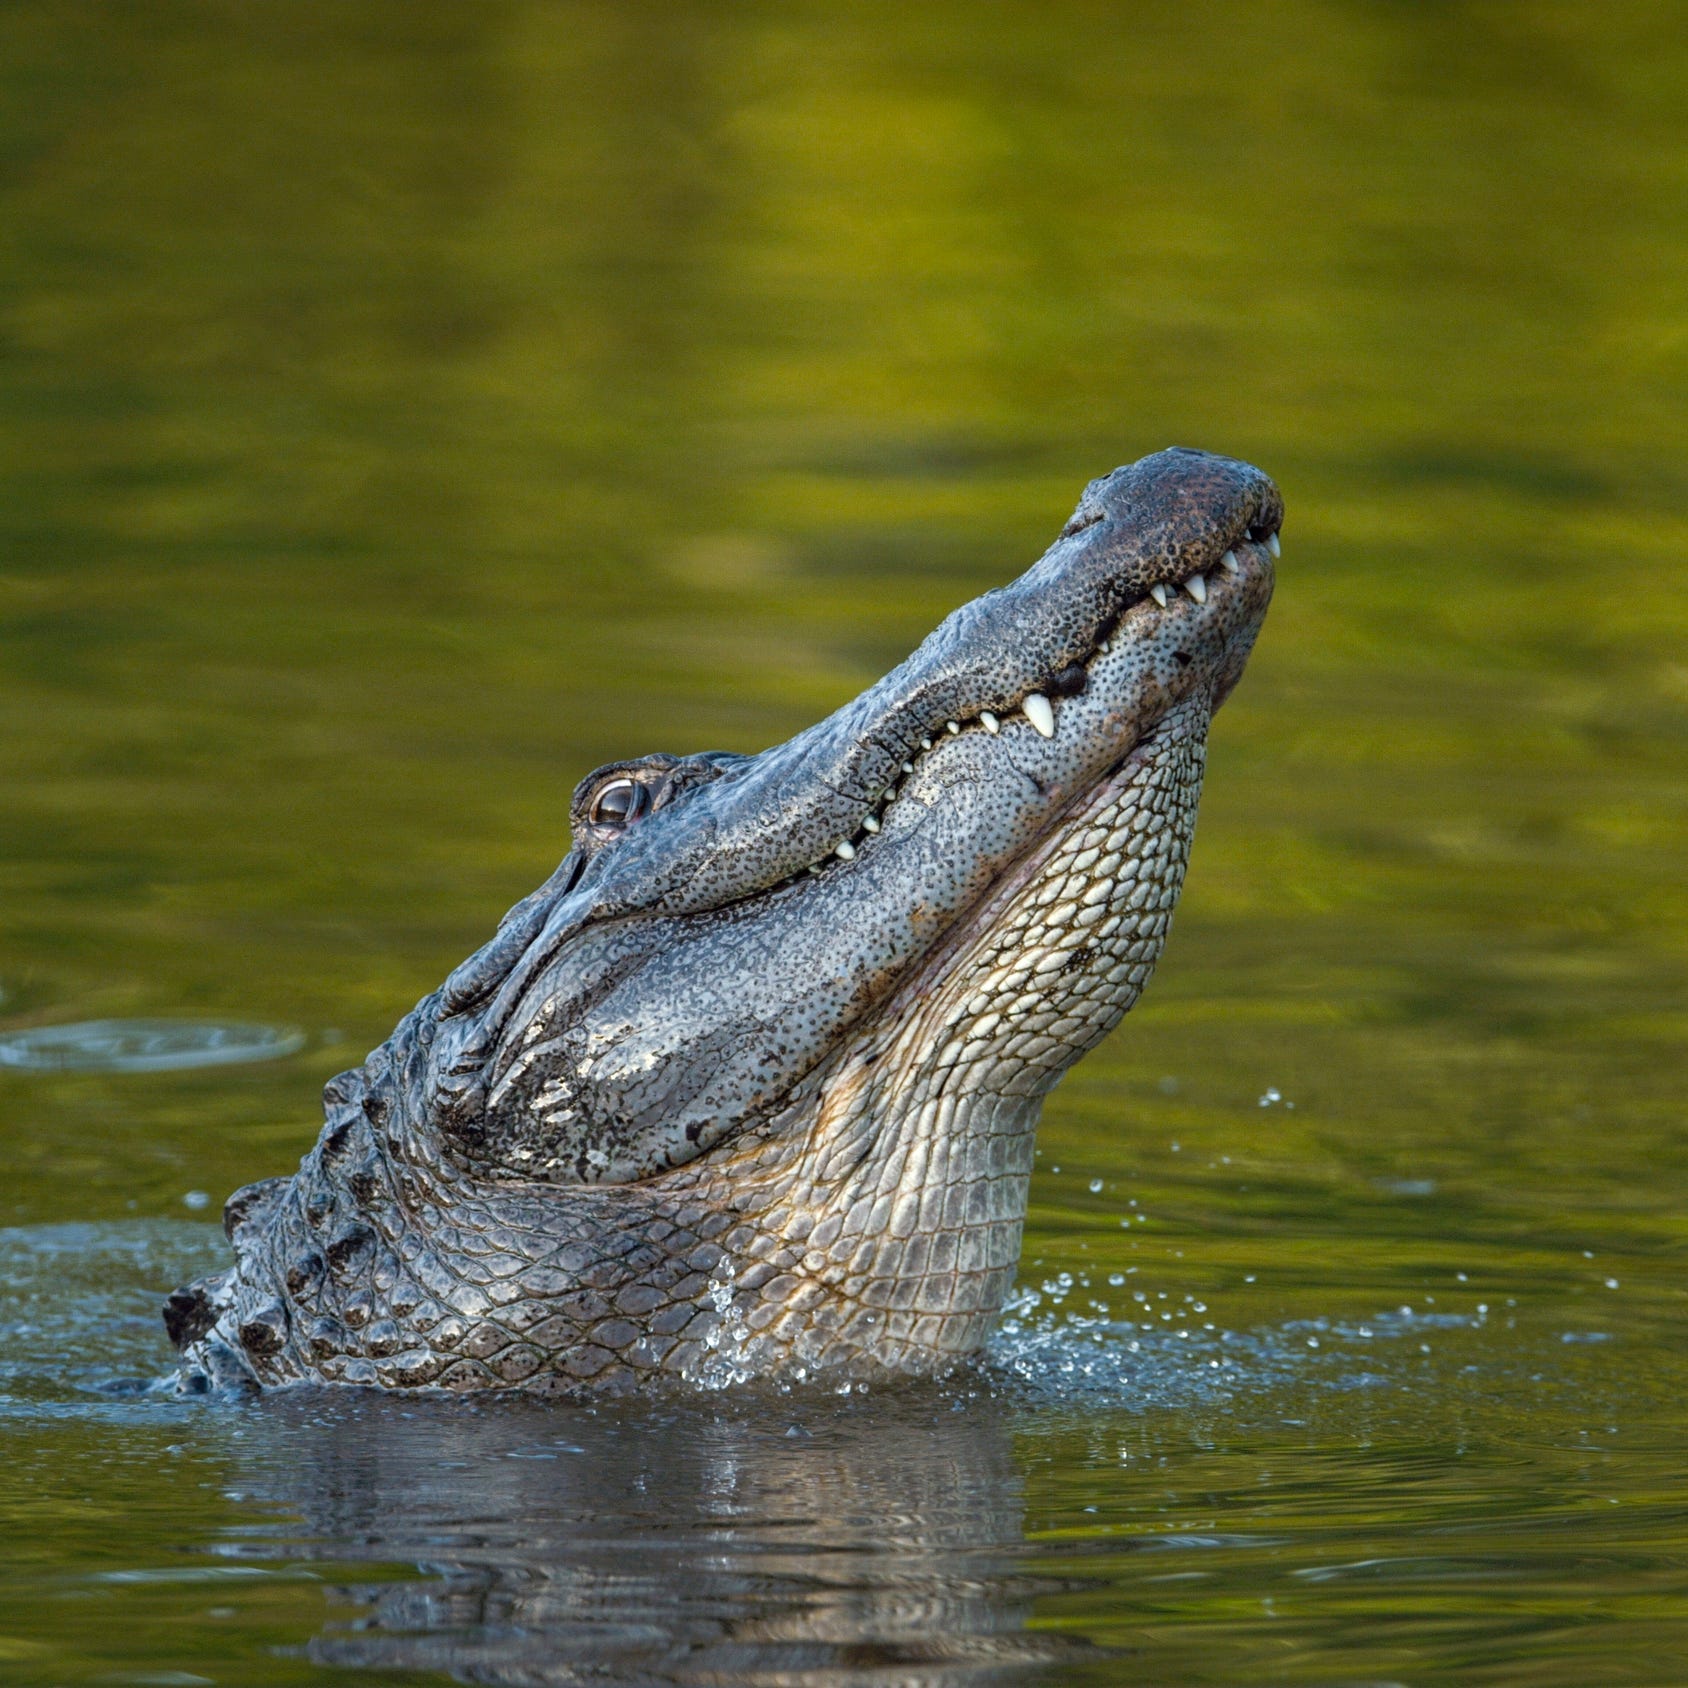 An alligator performs a water dance.